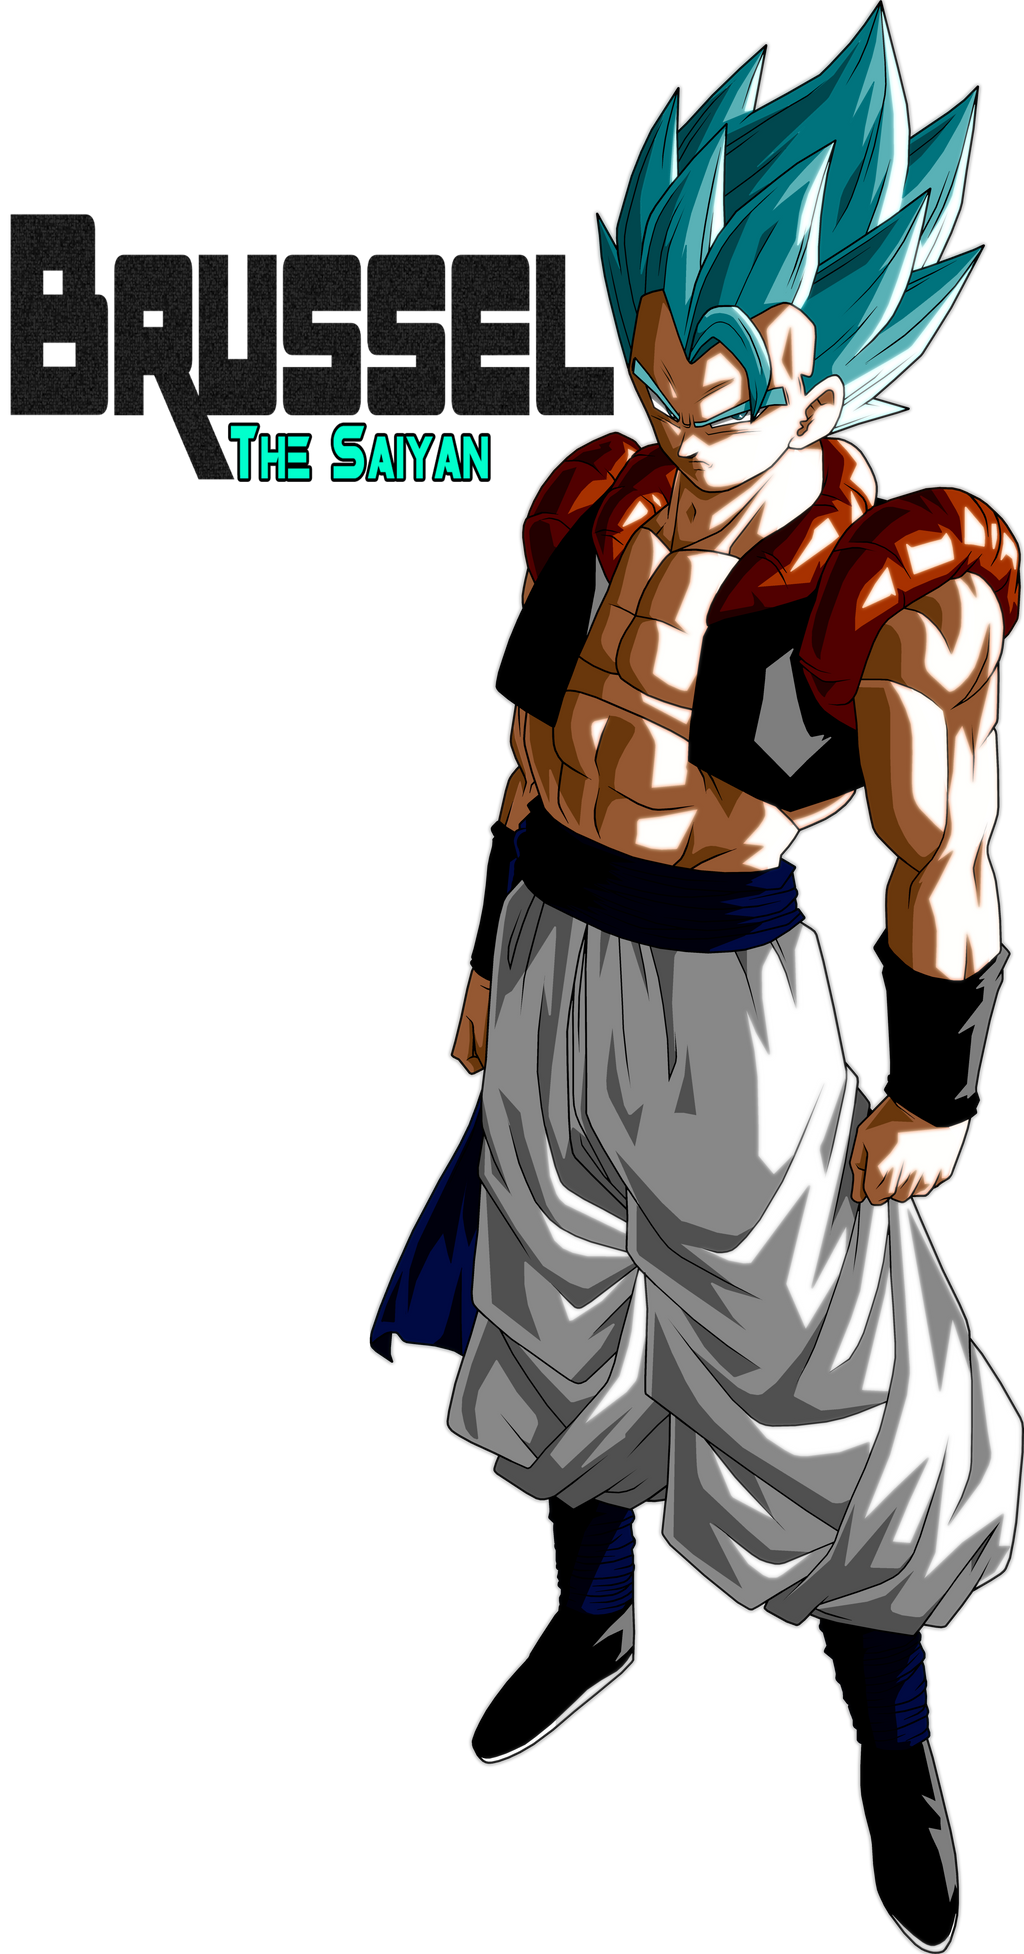 Full Power Super Saiyan 4 Goku by BrusselTheSaiyan on DeviantArt